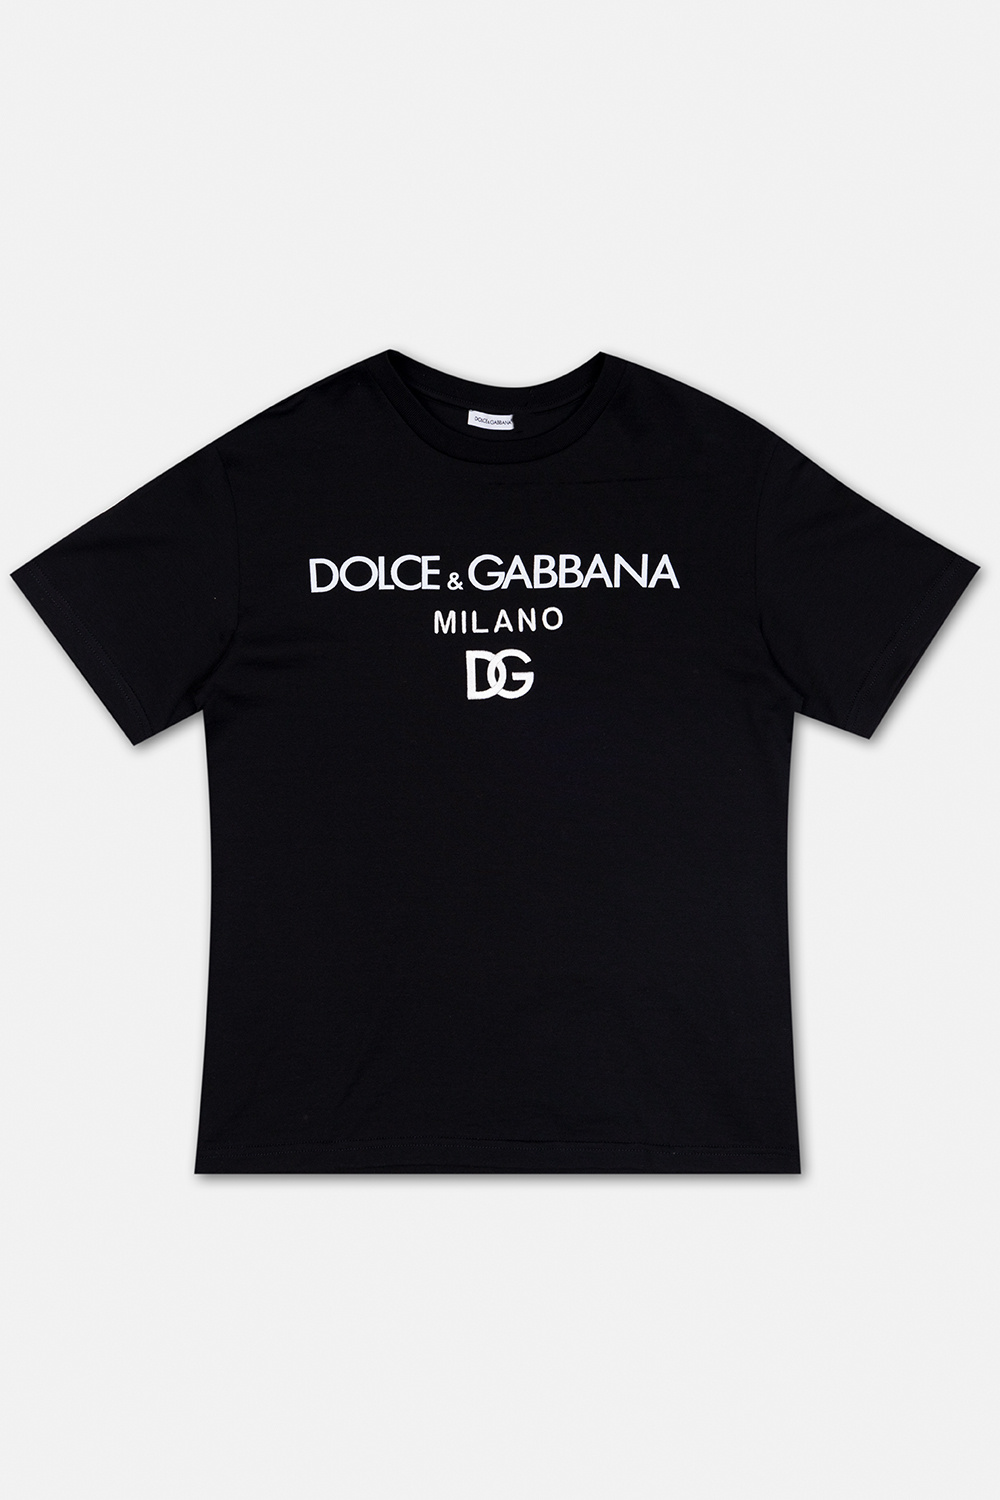 Dolce & Gabbana DG logo cross body bag T-shirt with logo